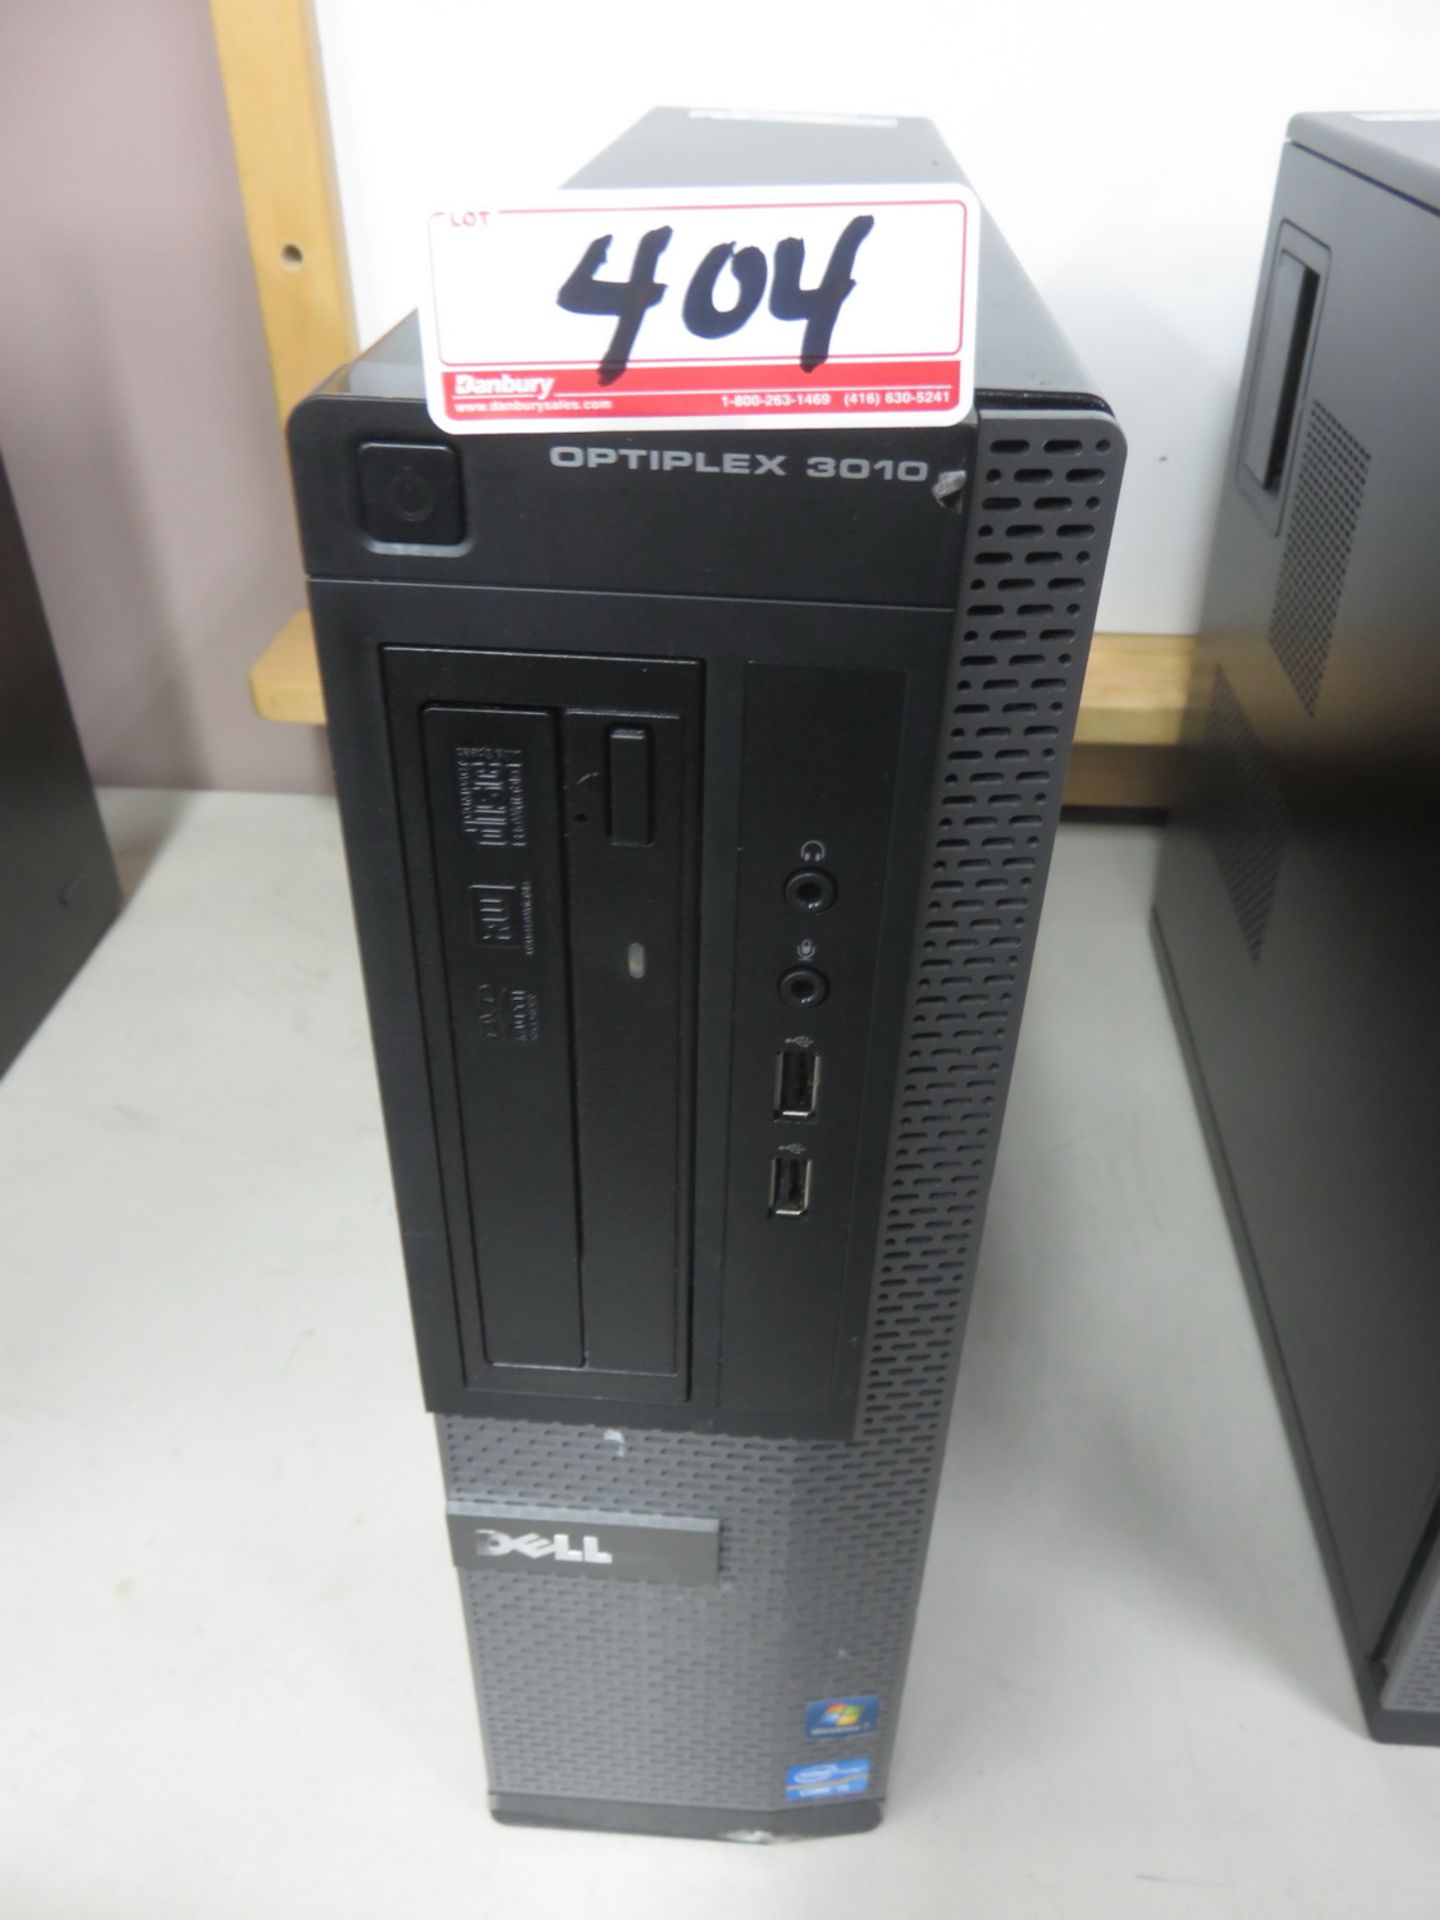 DELL OPTIPLEX 3010 SFF PC W/ INTEL CORE I5-3470 3.2GHZ PROCESSOR, 8GB RAM, 1TB HDD